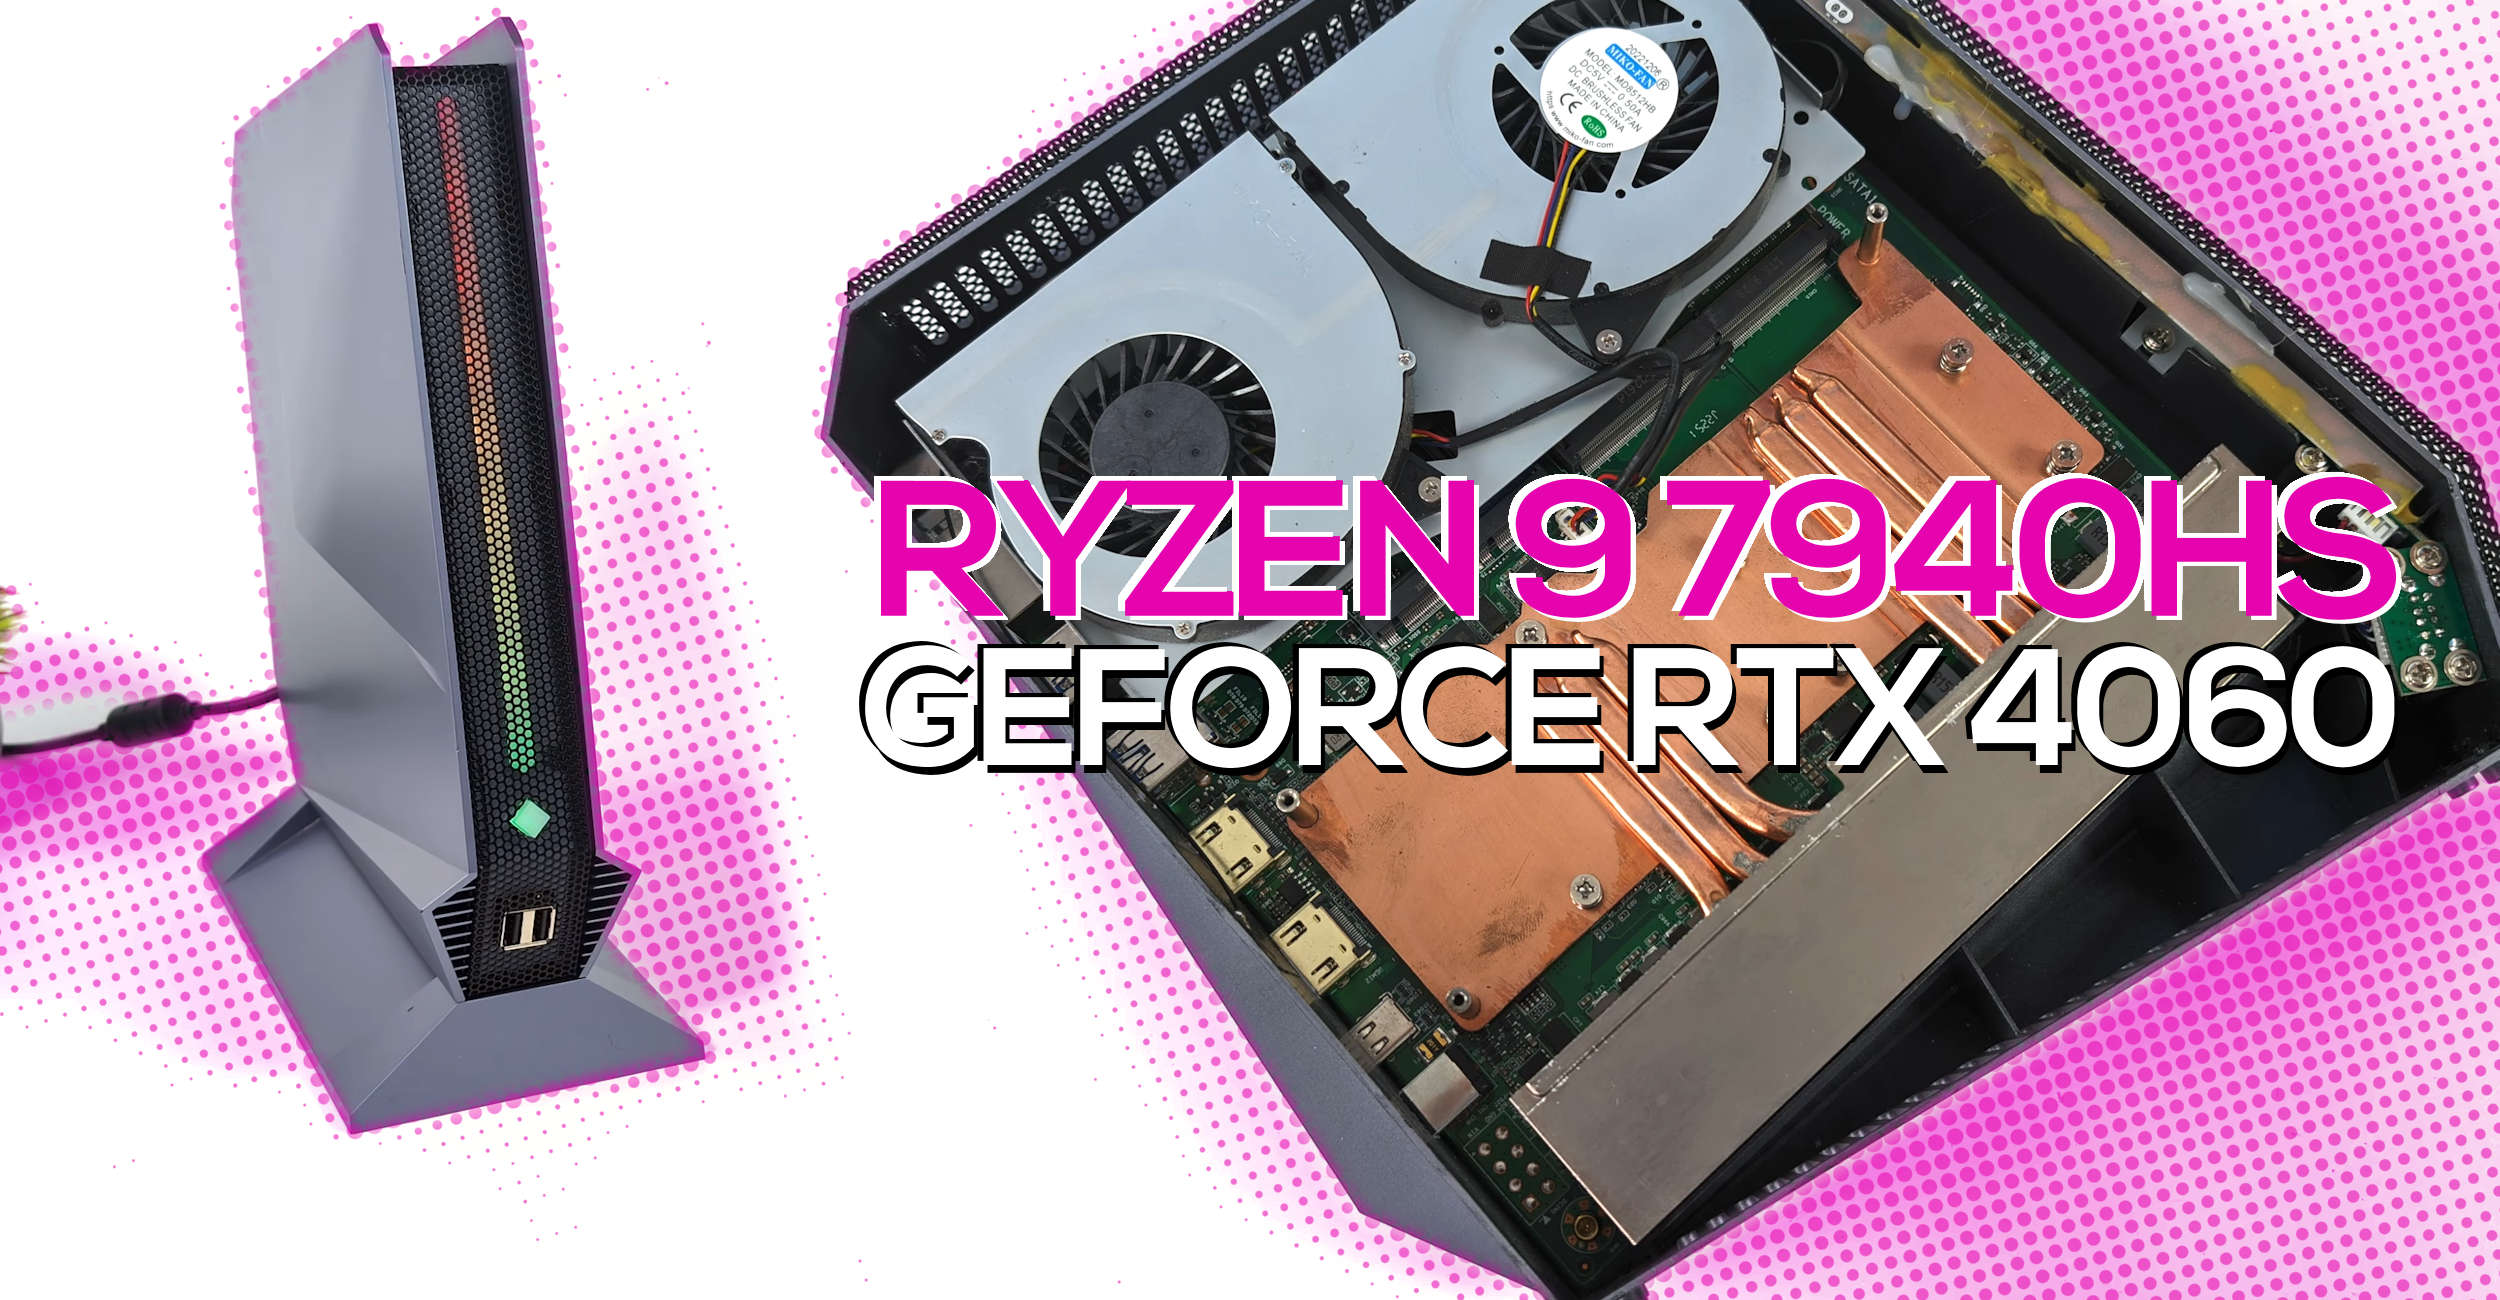 G4 Edge gaming Mini-PC combines Ryzen 9 7940HS and full power